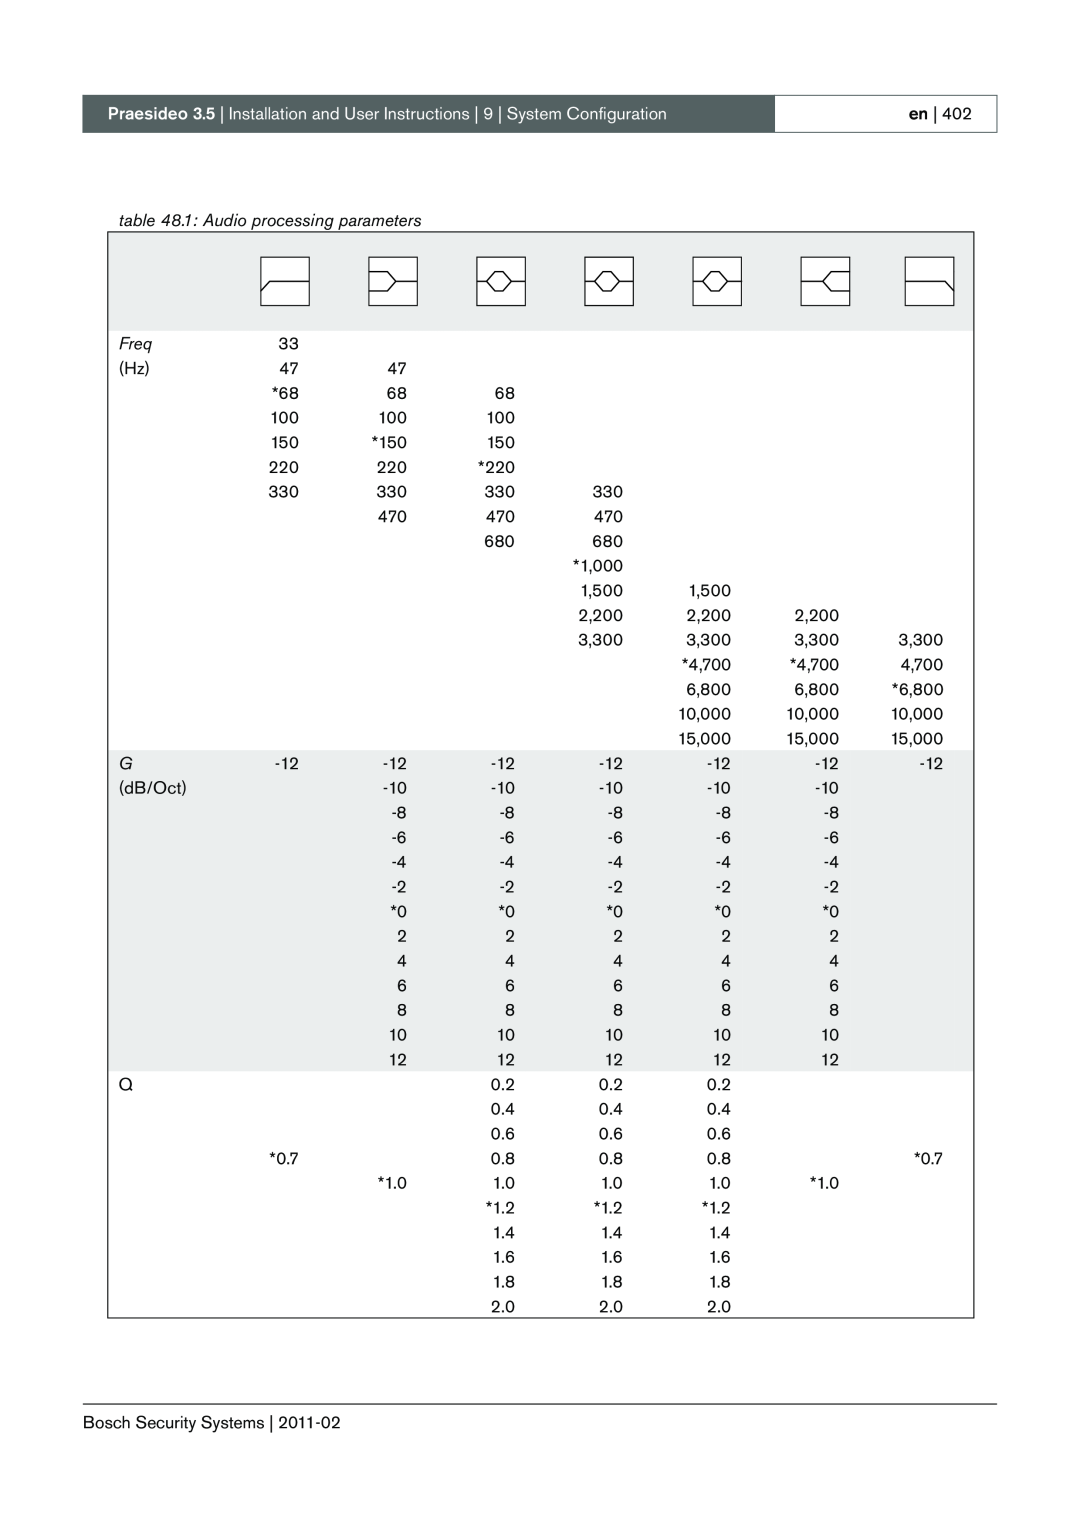 Bosch Appliances 3.5 manual 1: Audio processing parameters, Freq, 1,000, 1,500, 2,200, 3,300, 4,700, 6,800, 10,000, 15,000 